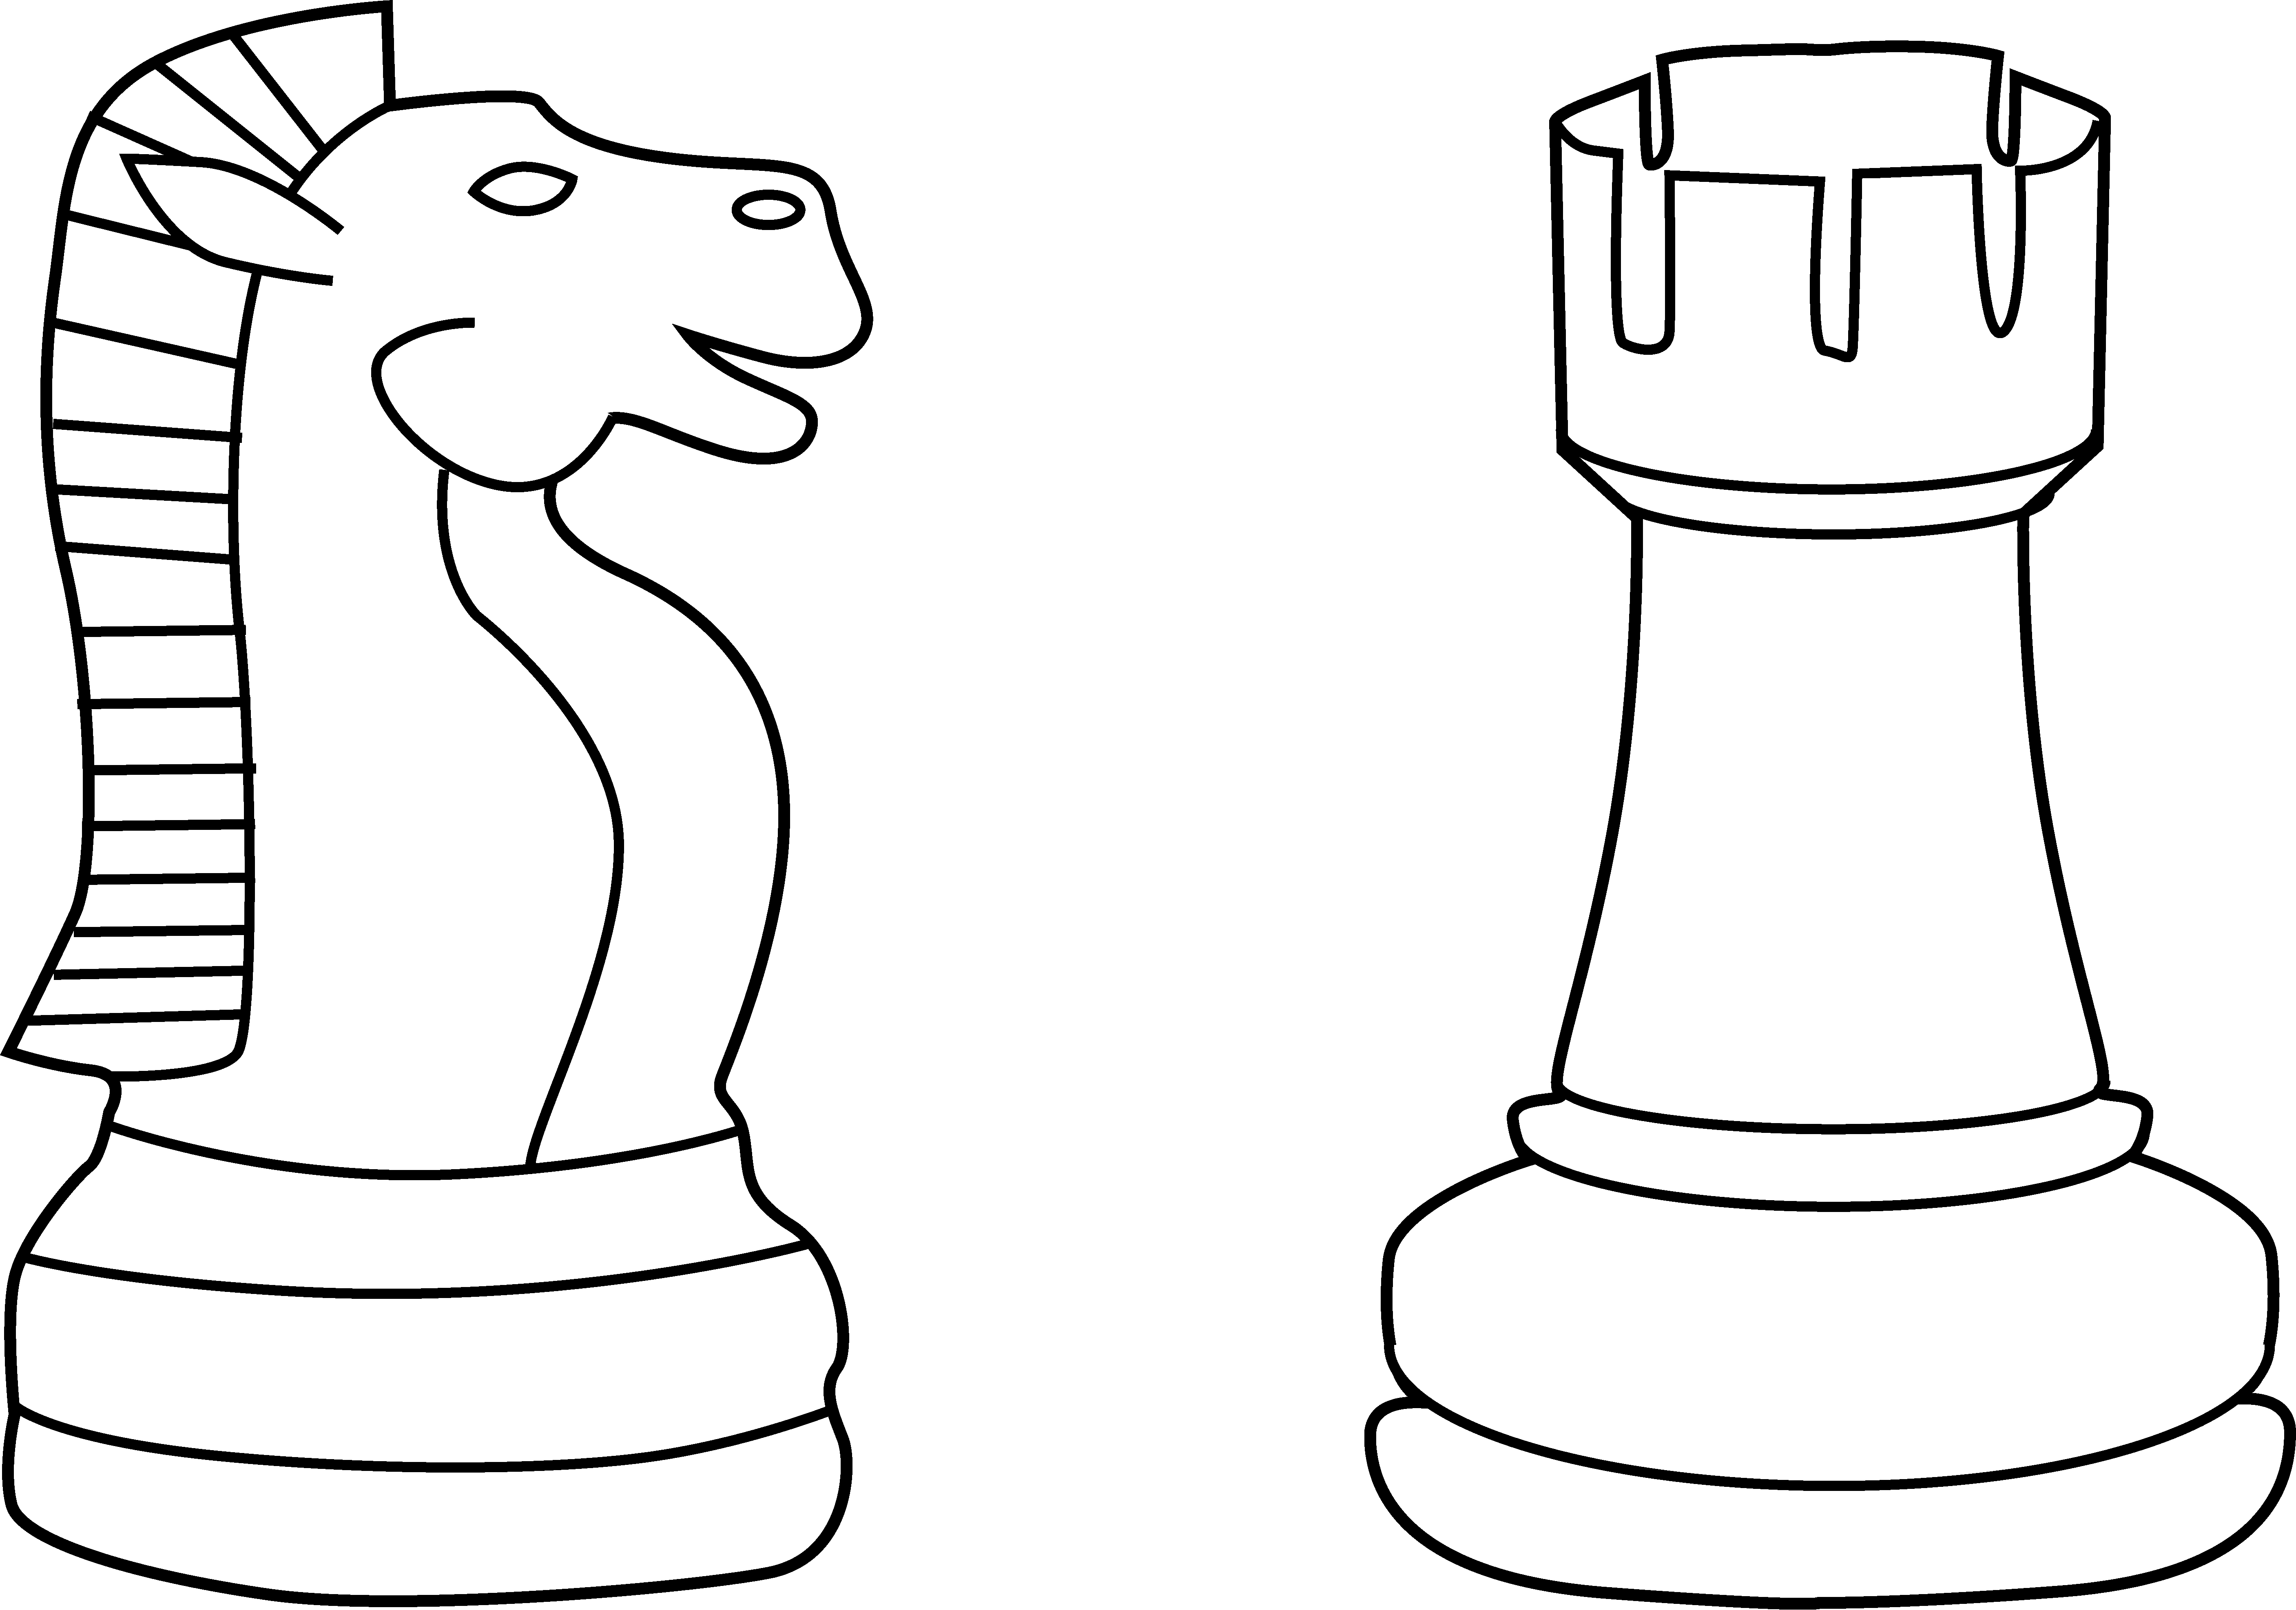 Chess Clipart Chess Piece Chess Board Pieces Cartoon